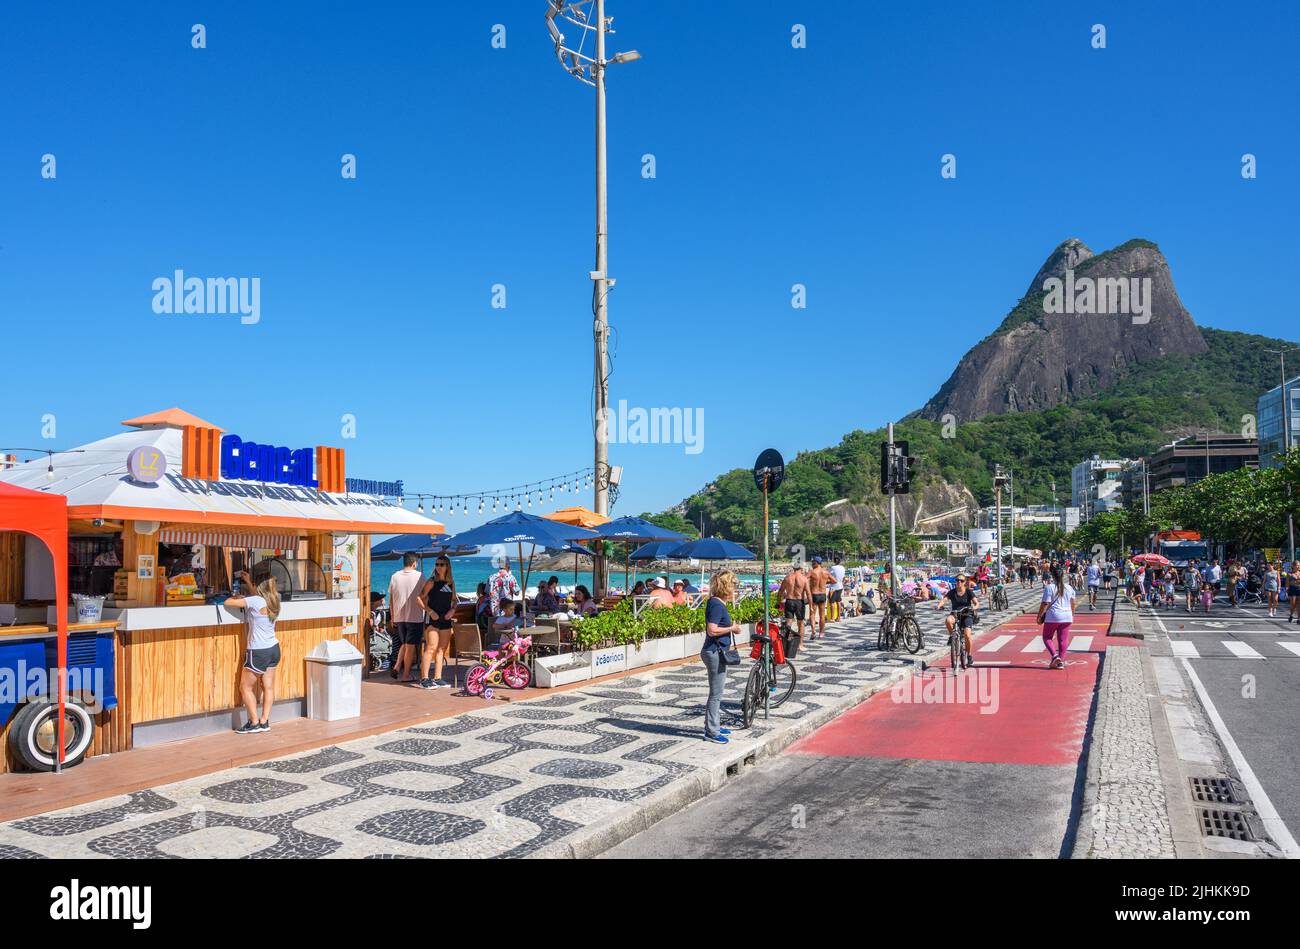 Kiosque sur la promenade du front de mer, Avenida Vieira Souto, Ipanema, Rio de Janeiro, Brésil Banque D'Images